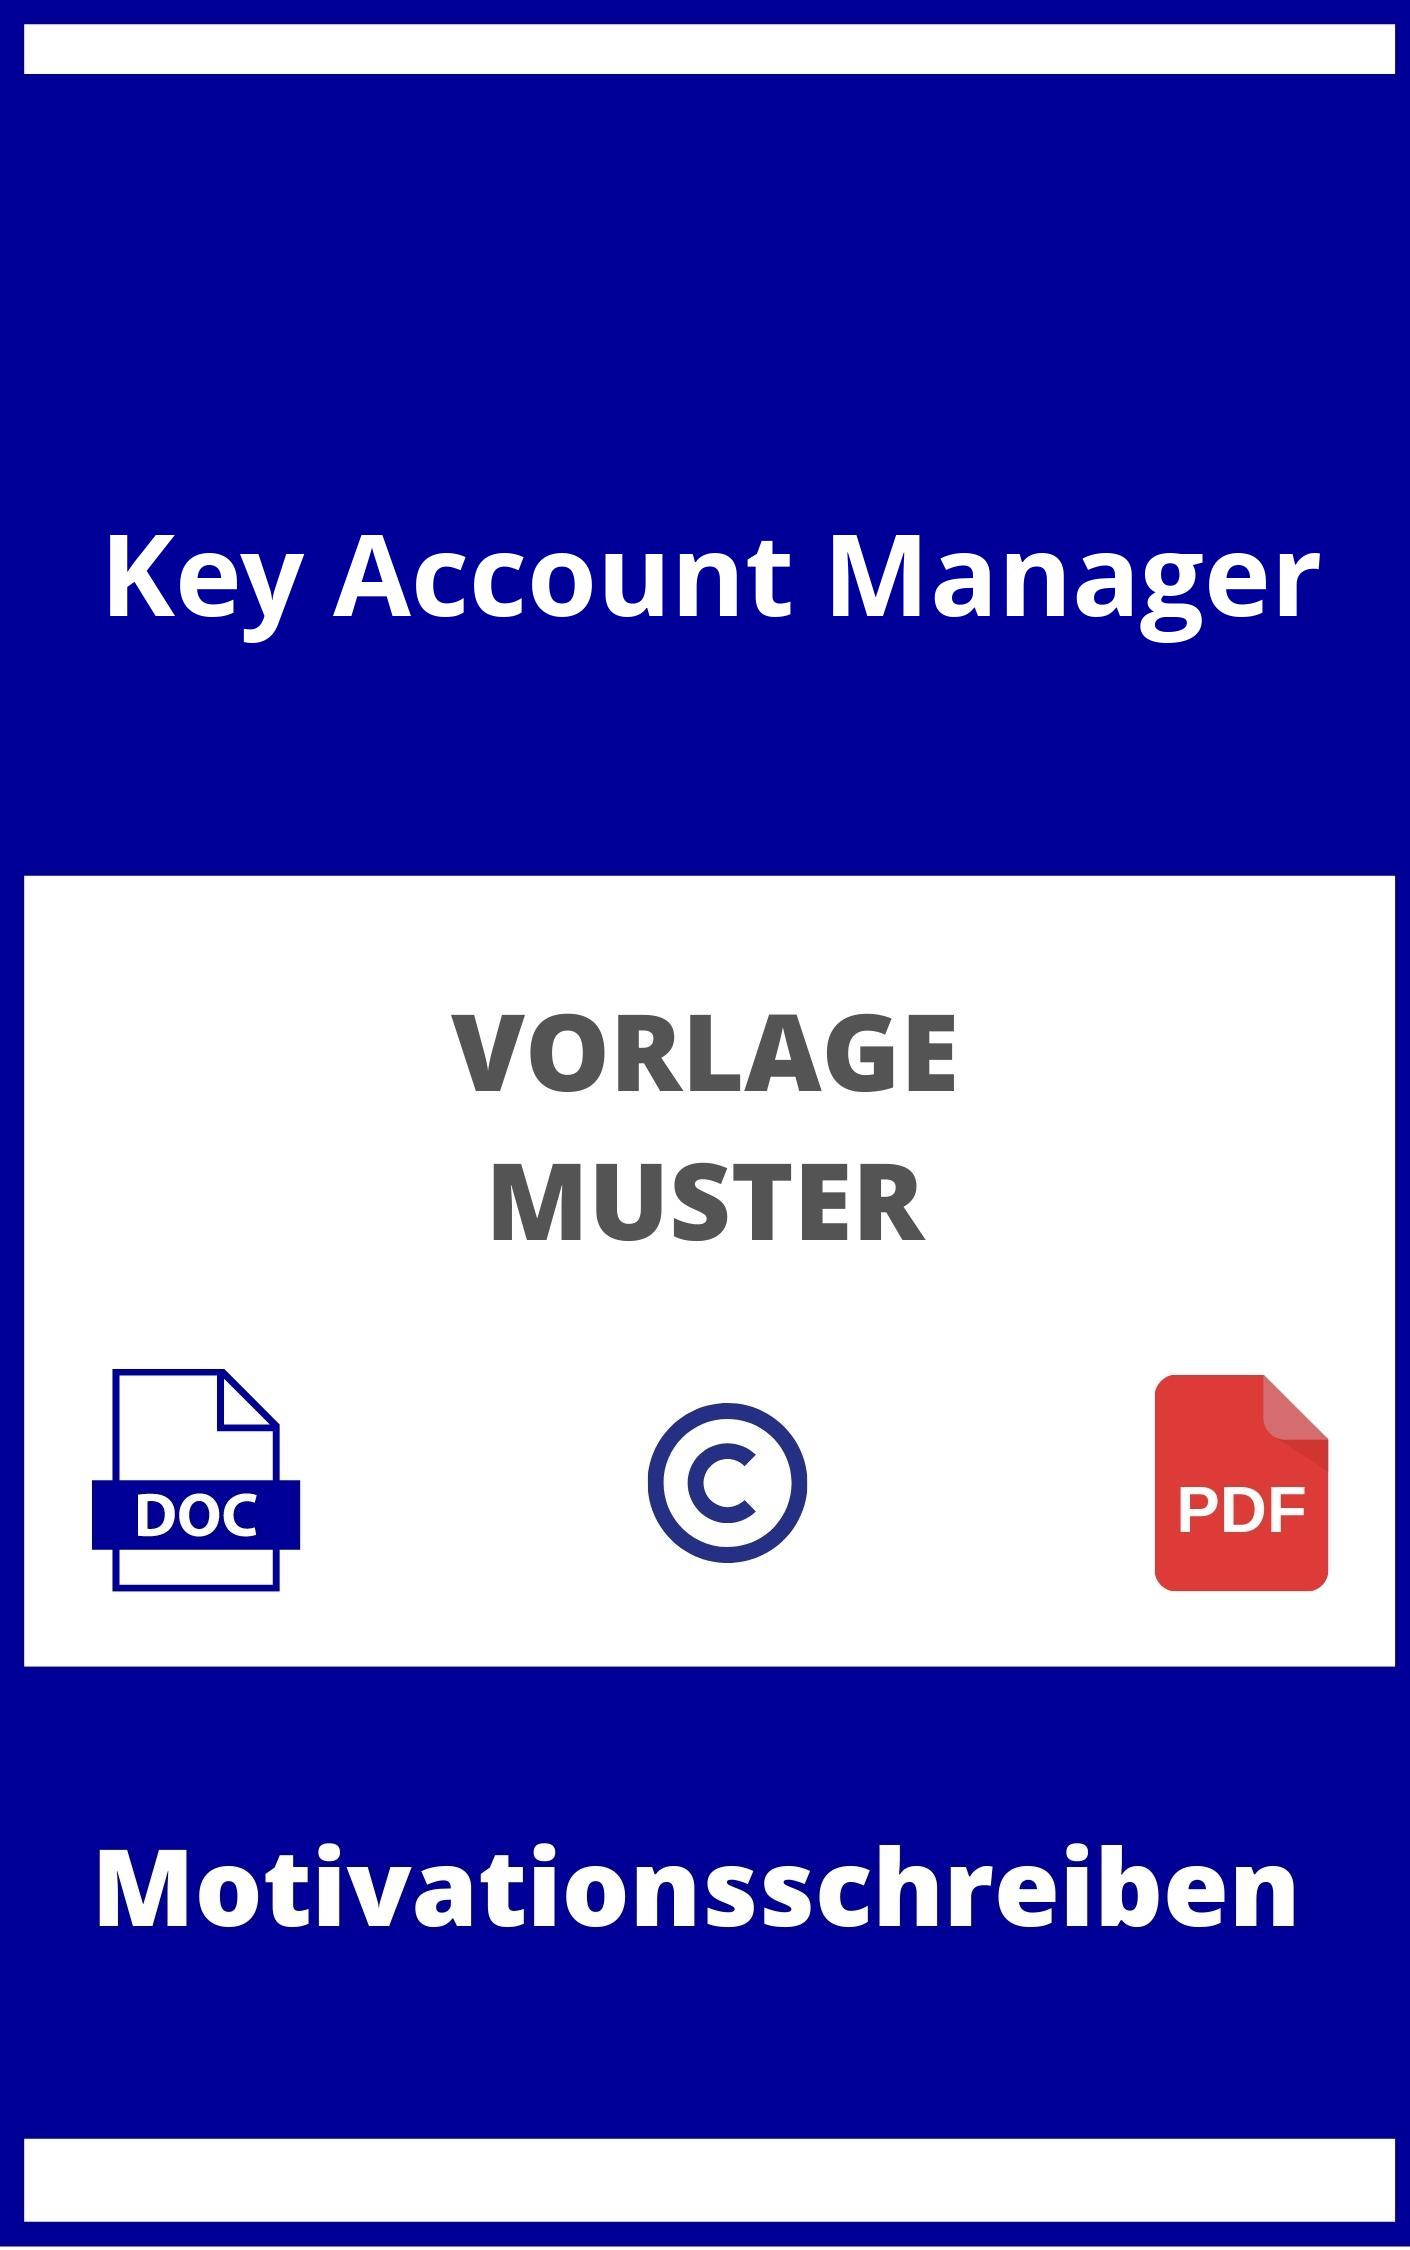 Motivationsschreiben Key Account Manager